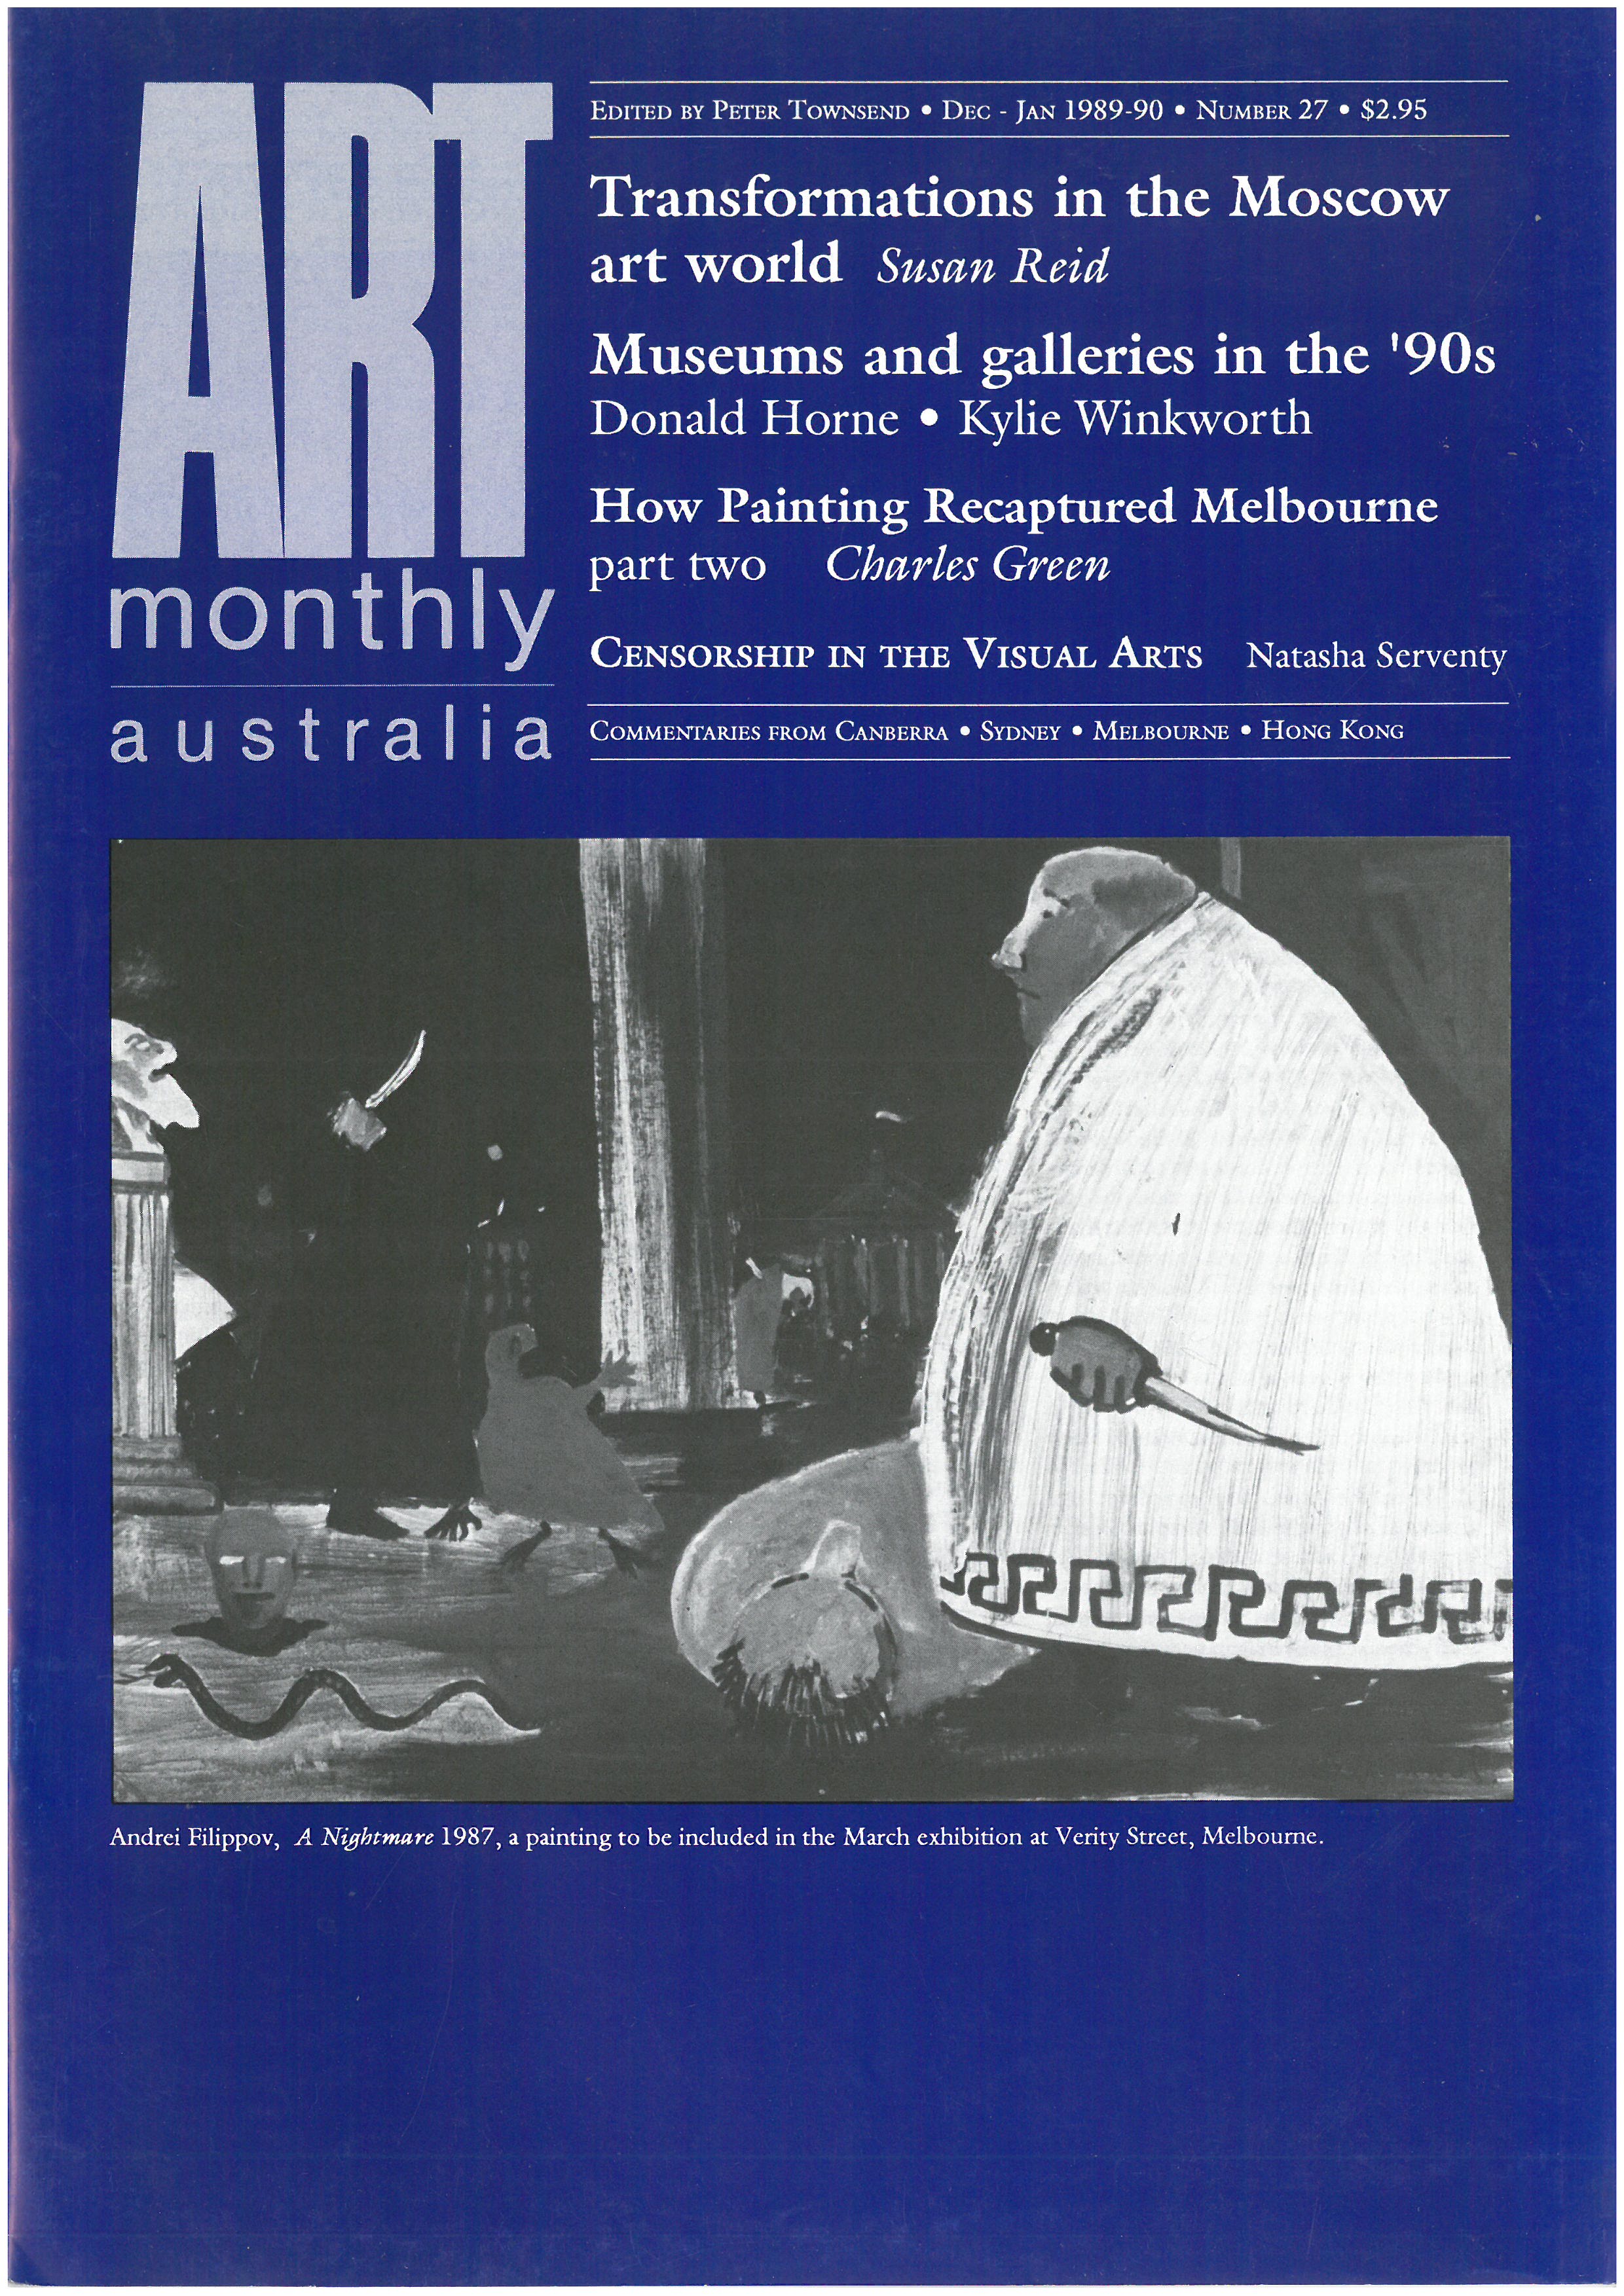 Issue 27 Dec-Jan 1989-90